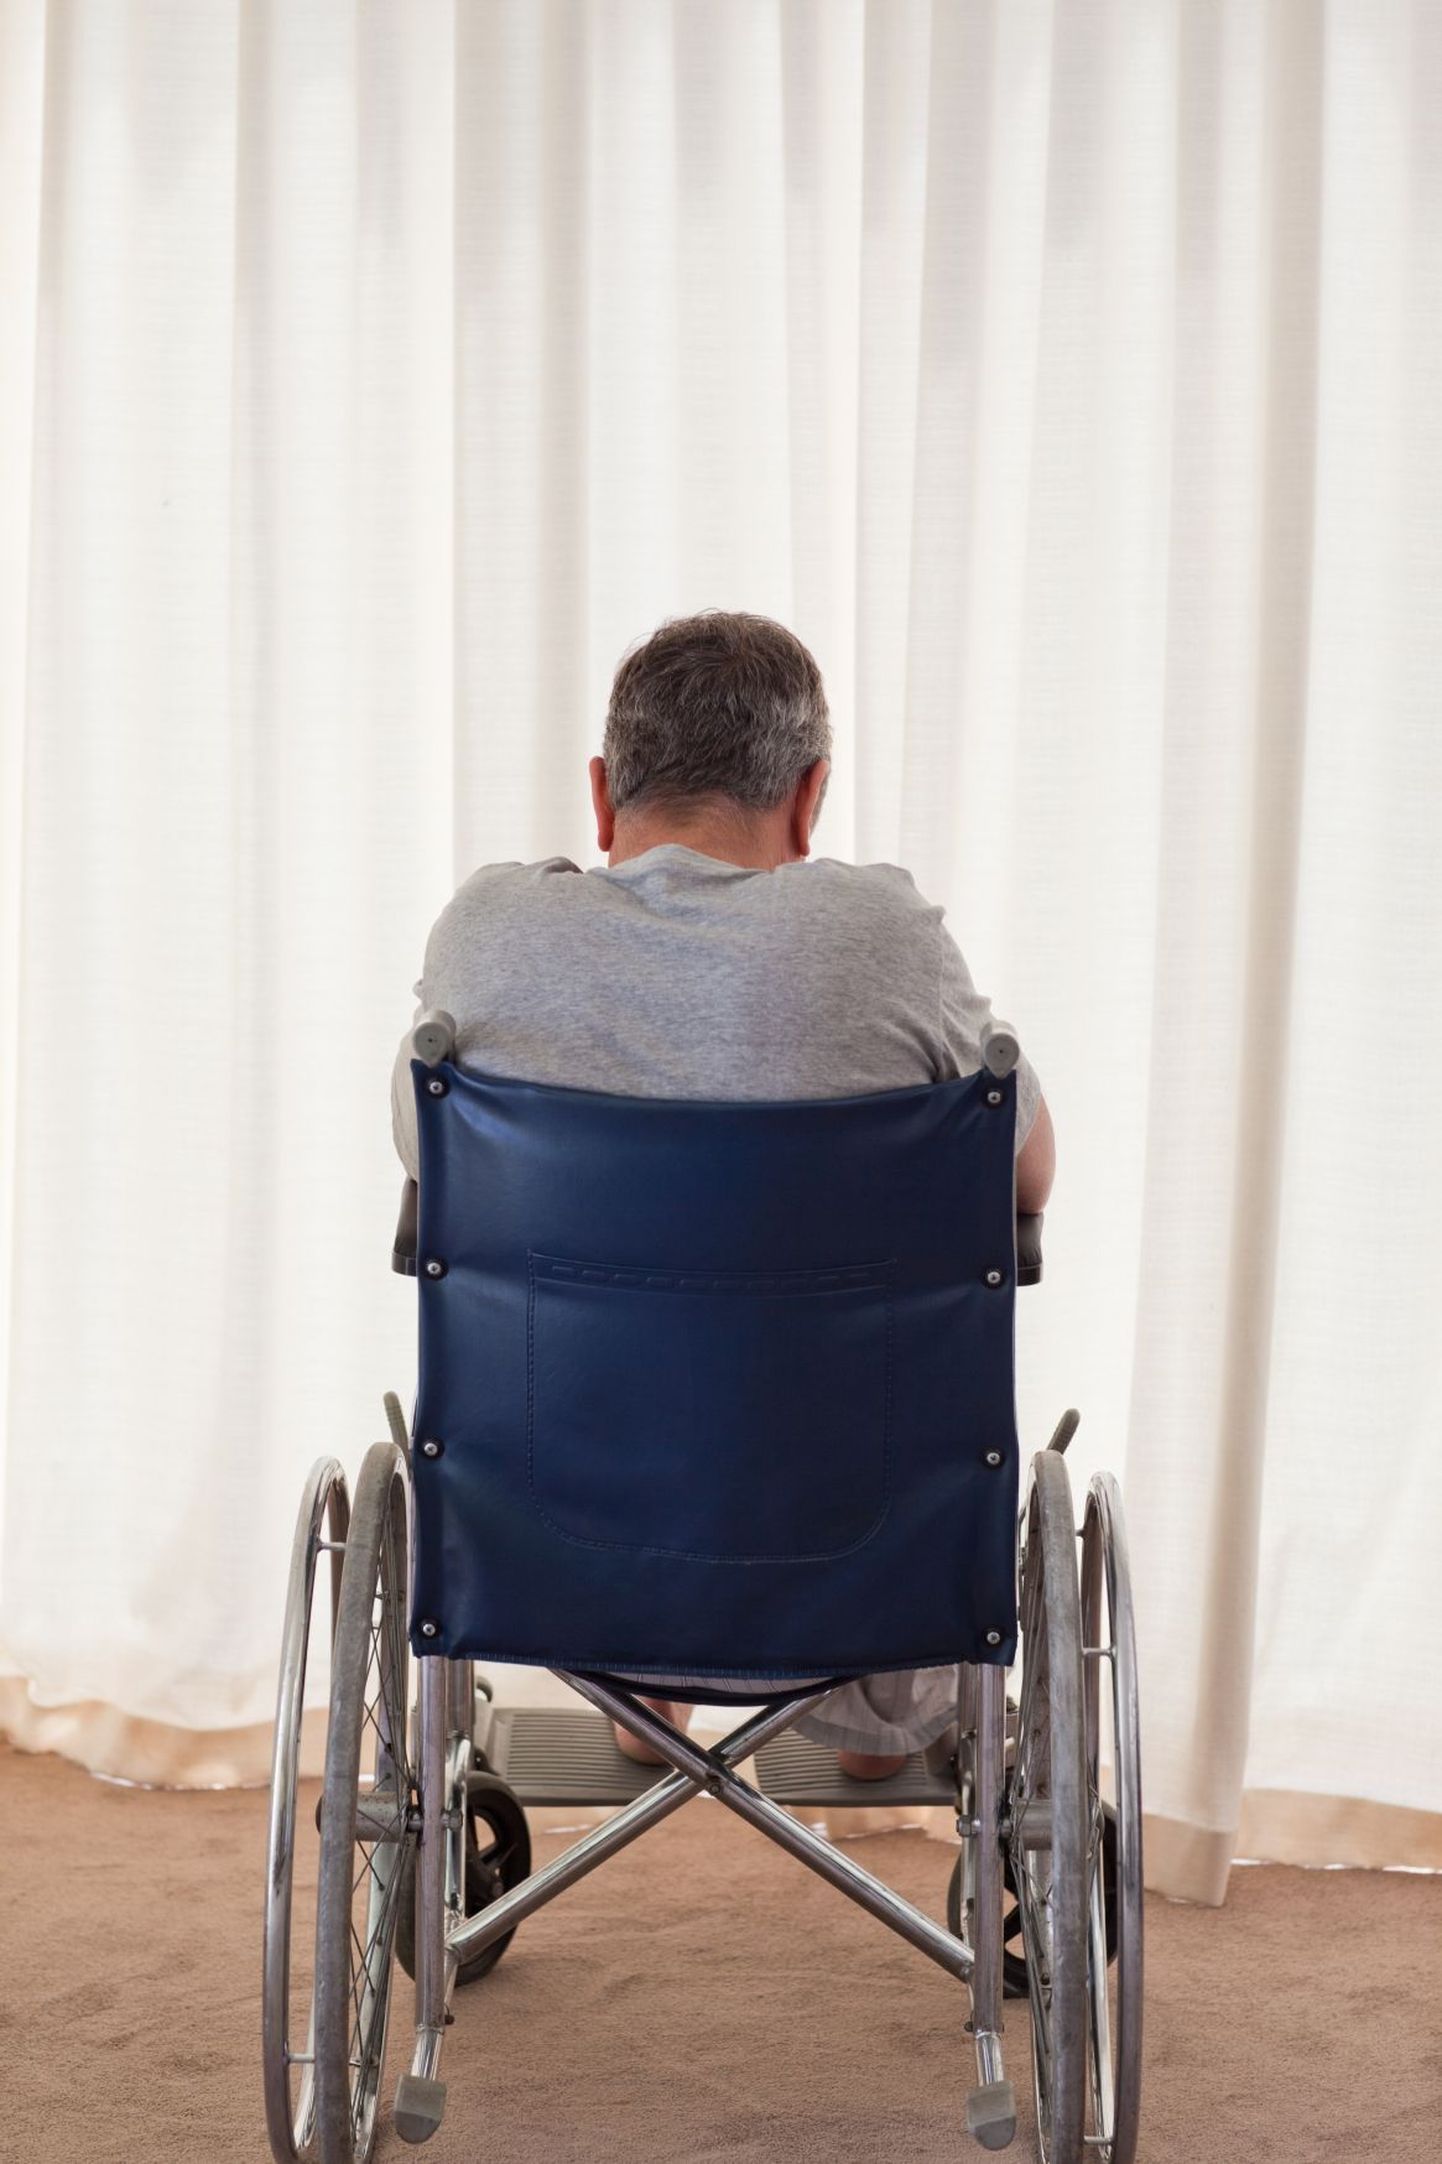 Мужчина на инвалидной коляске. Иллюстративное фото.